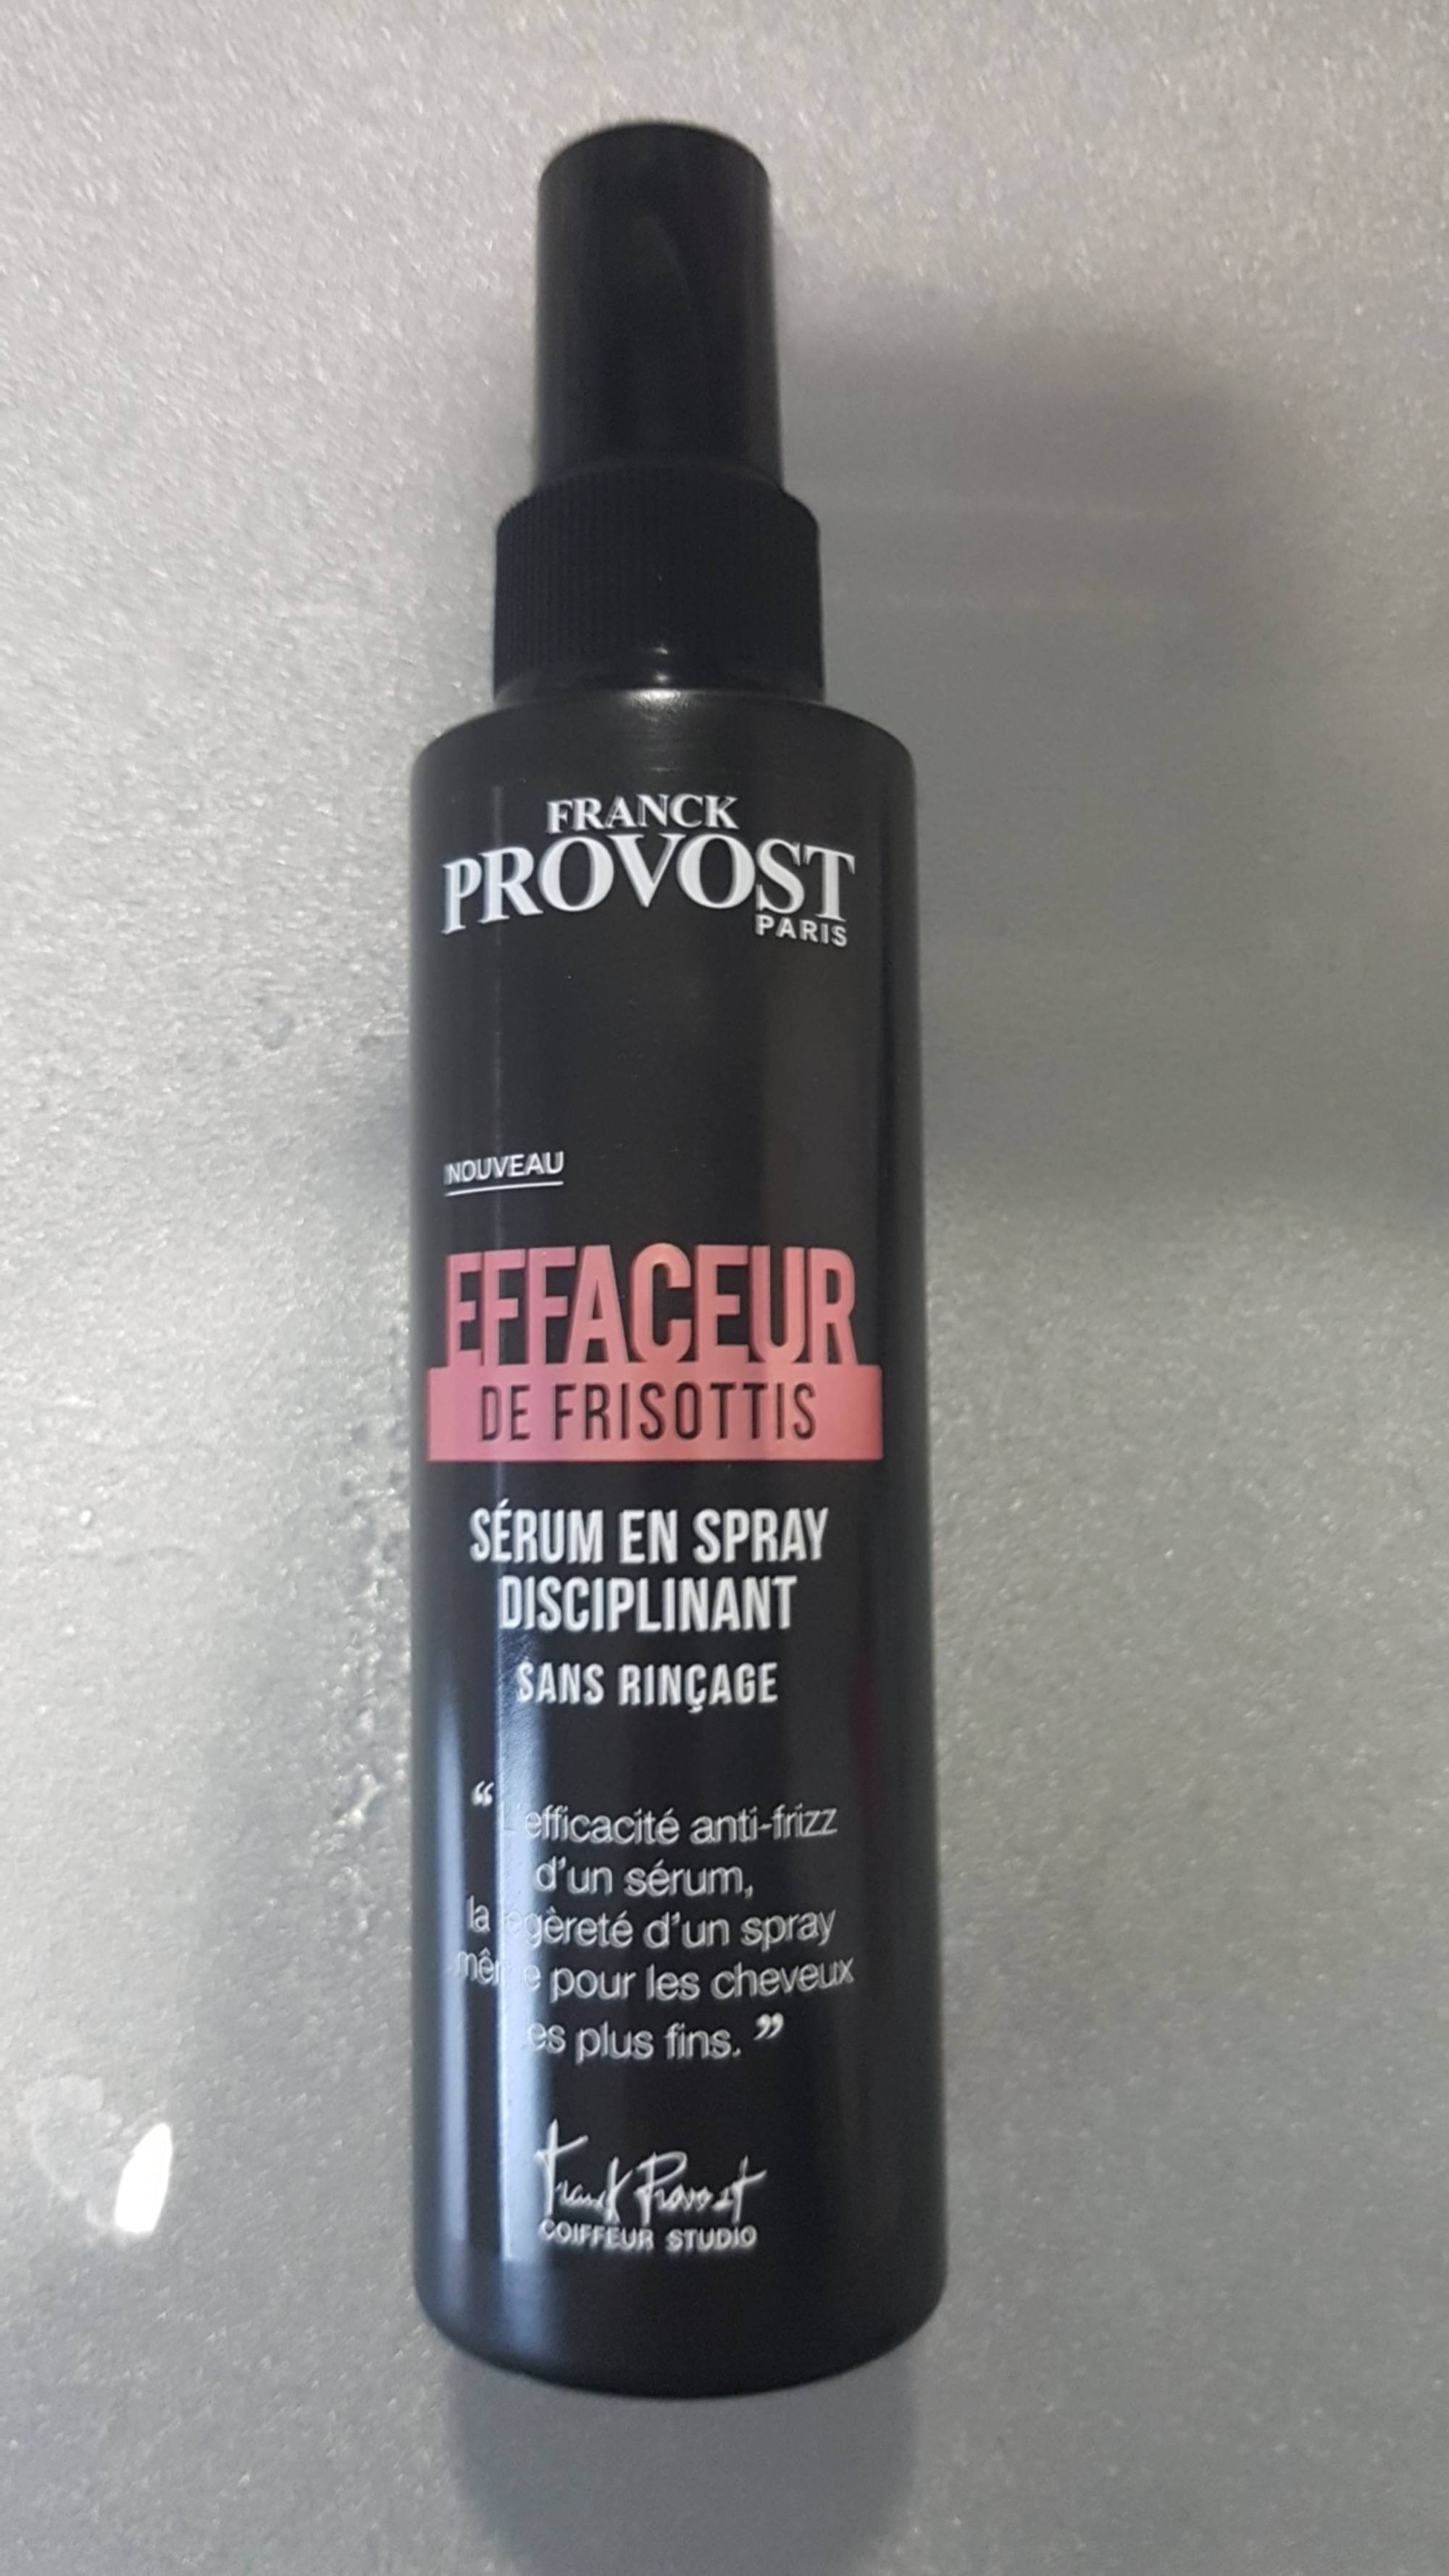 FRANCK PROVOST - Effaceur de frisottis - Sérum en spray disciplinant